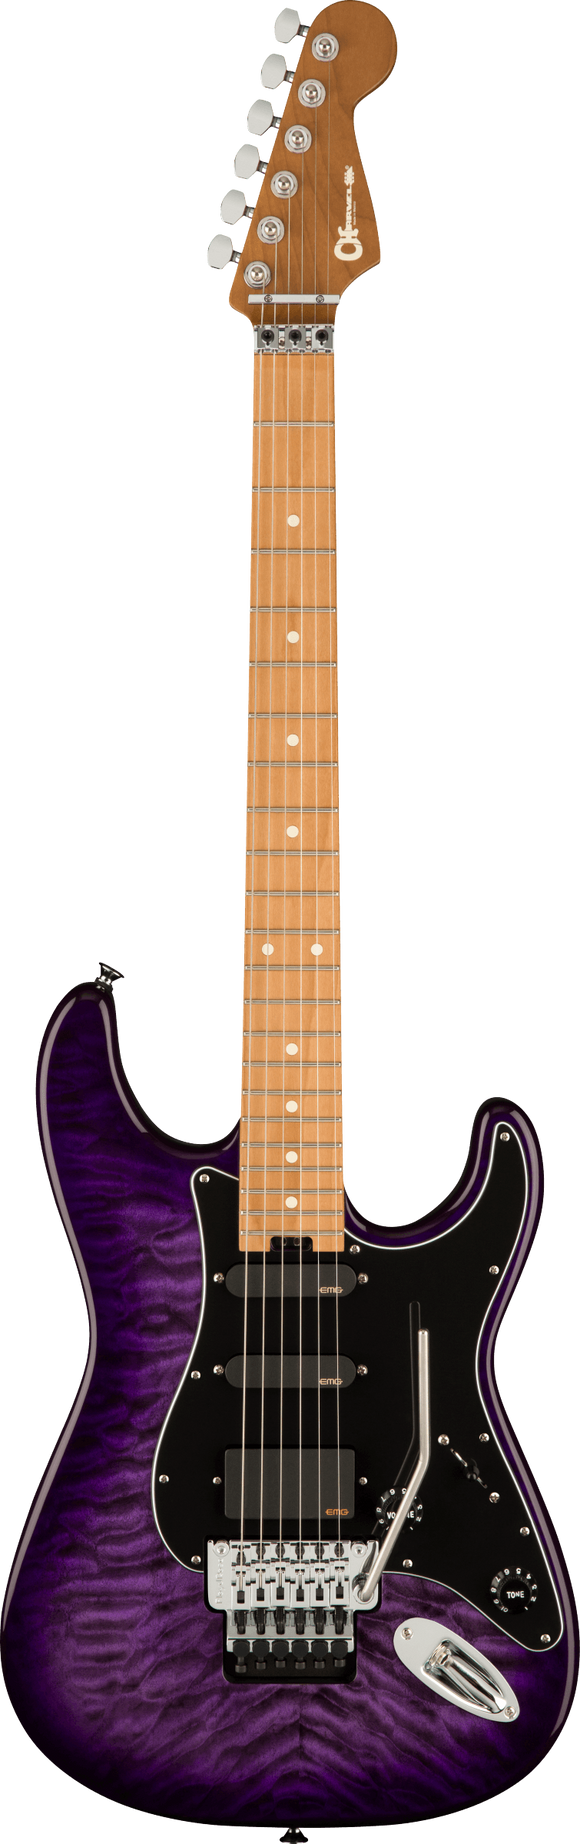 Charvel Marco Sfogli Signature Pro-Mod So-Cal Style 1, Transparent Purple Burst